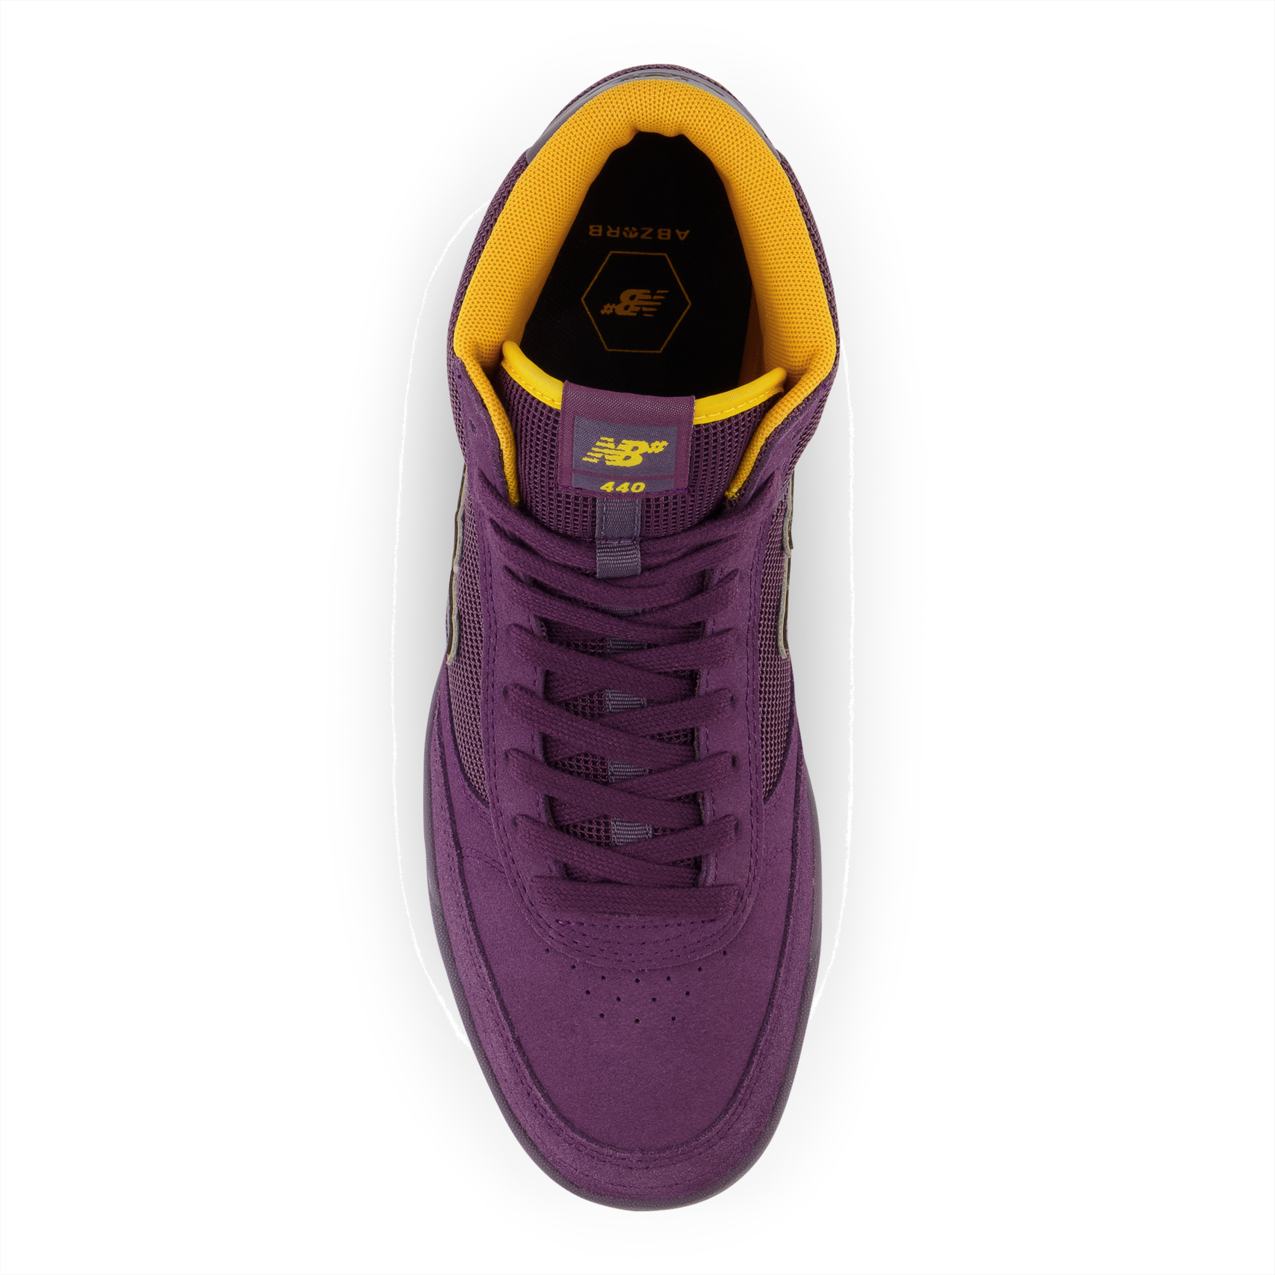 New Balance Numeric Men's 440 High Purple Yellow Shoes